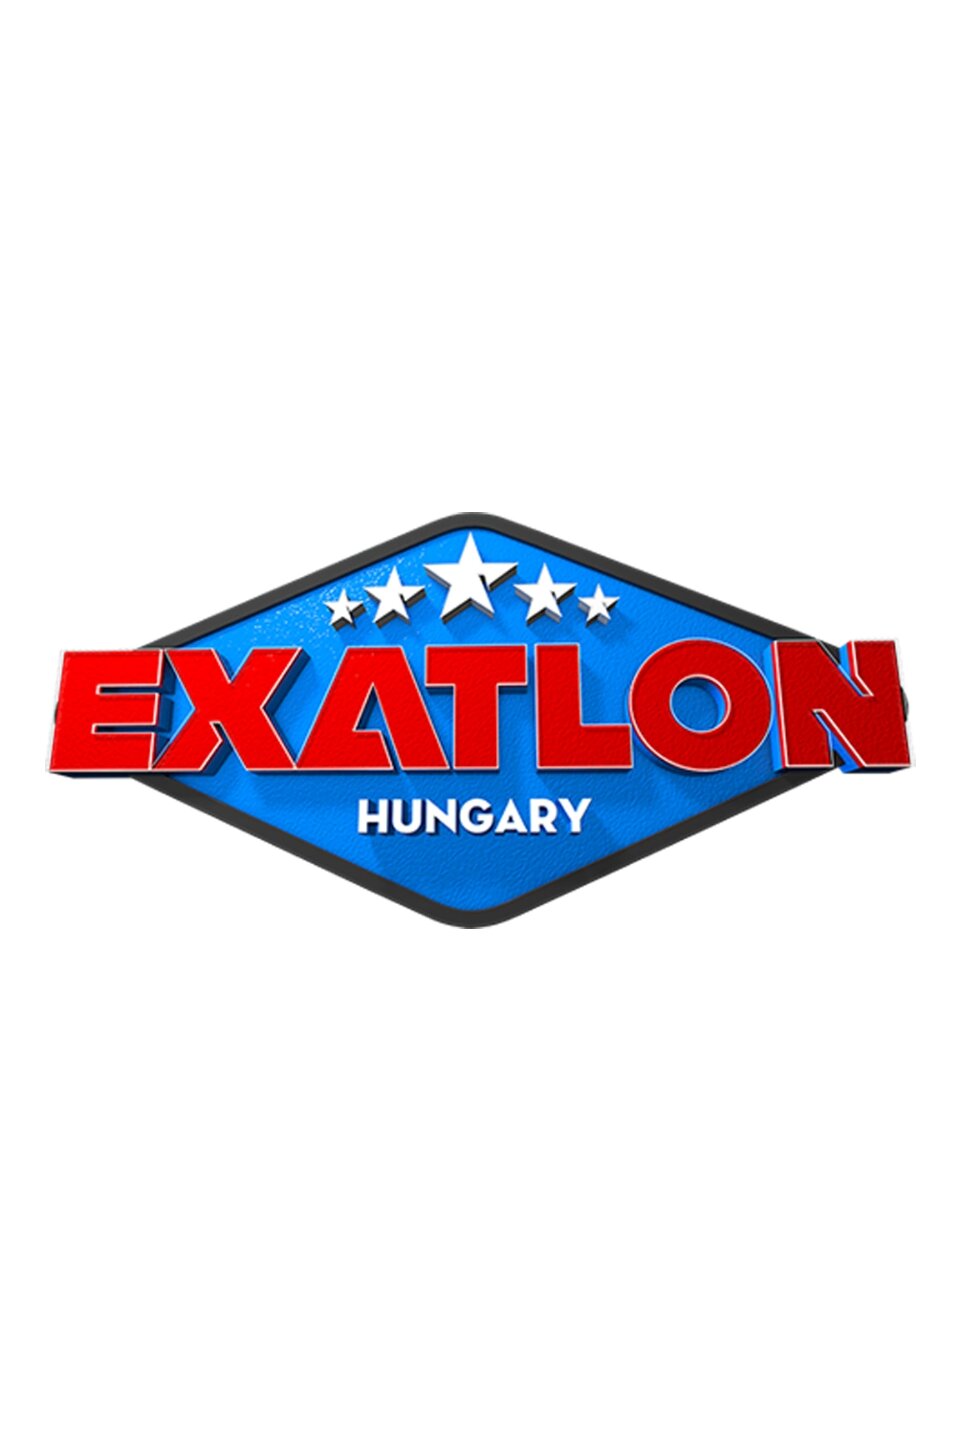 Exatlon Hungary ne zaman